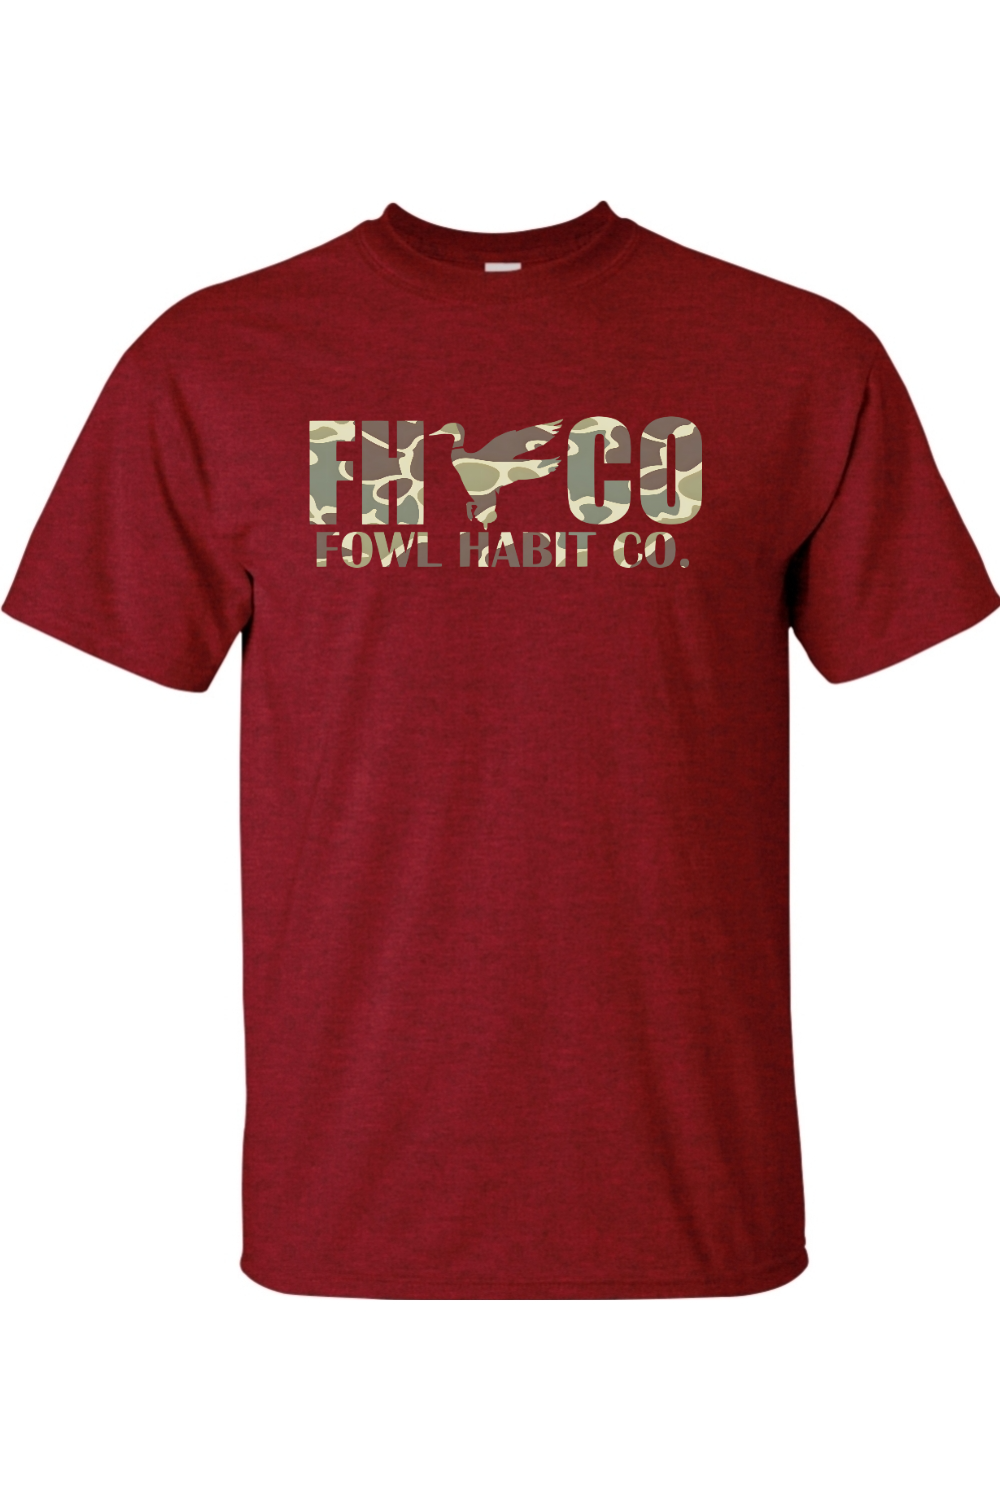 Camo Brand T-Shirt - Fowl Habit Co.